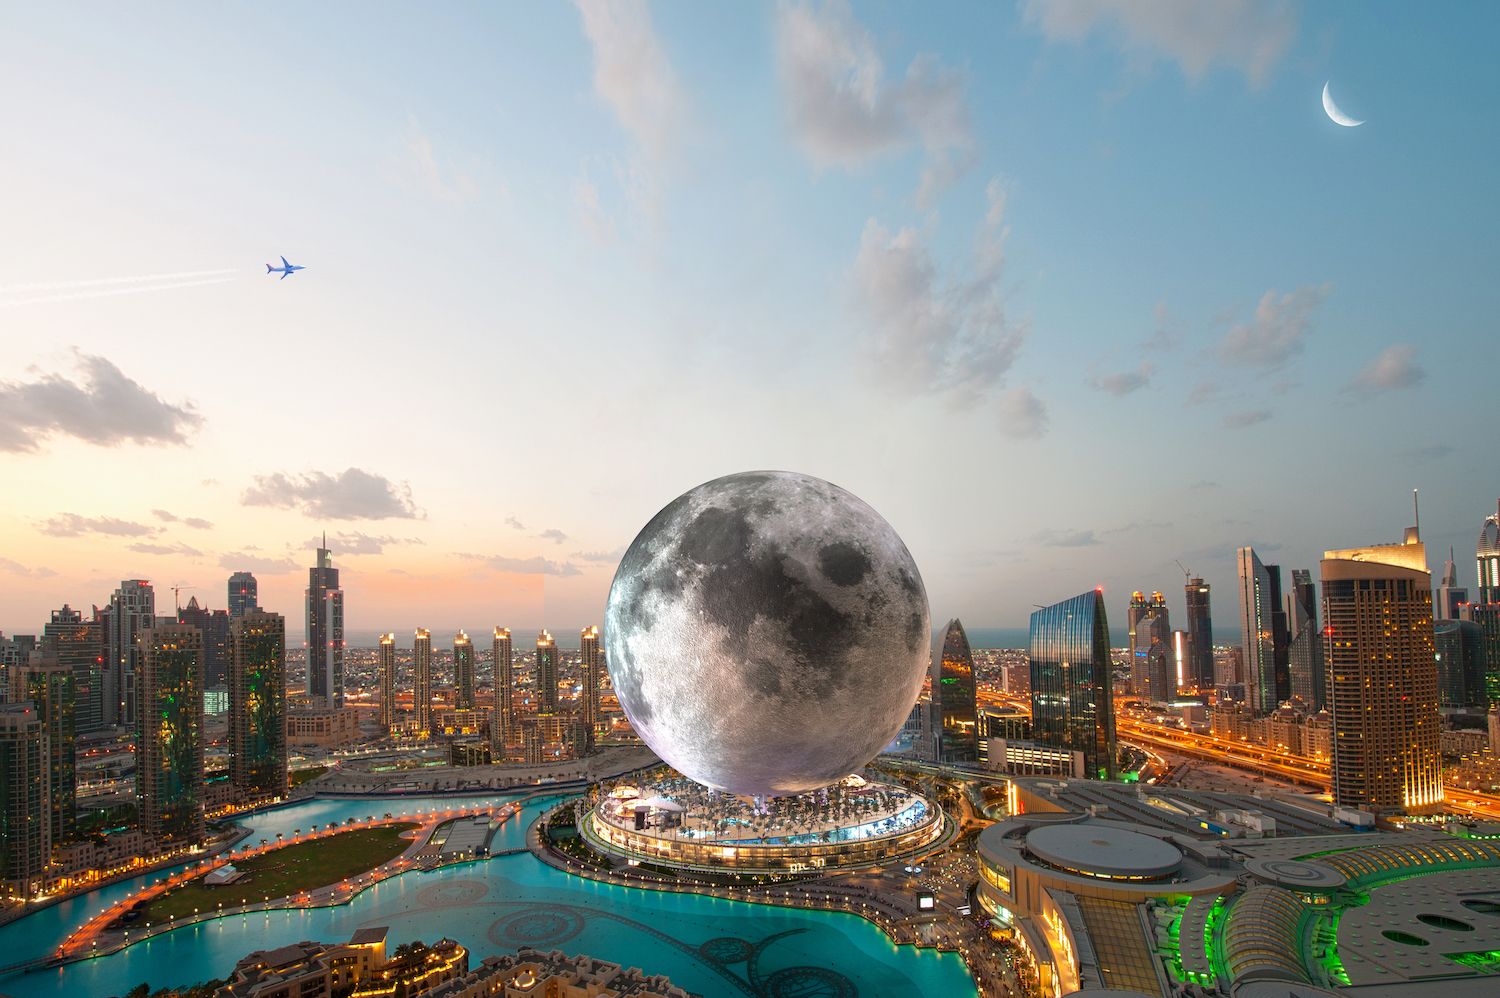 Resort shaped like the Moon in Dubai